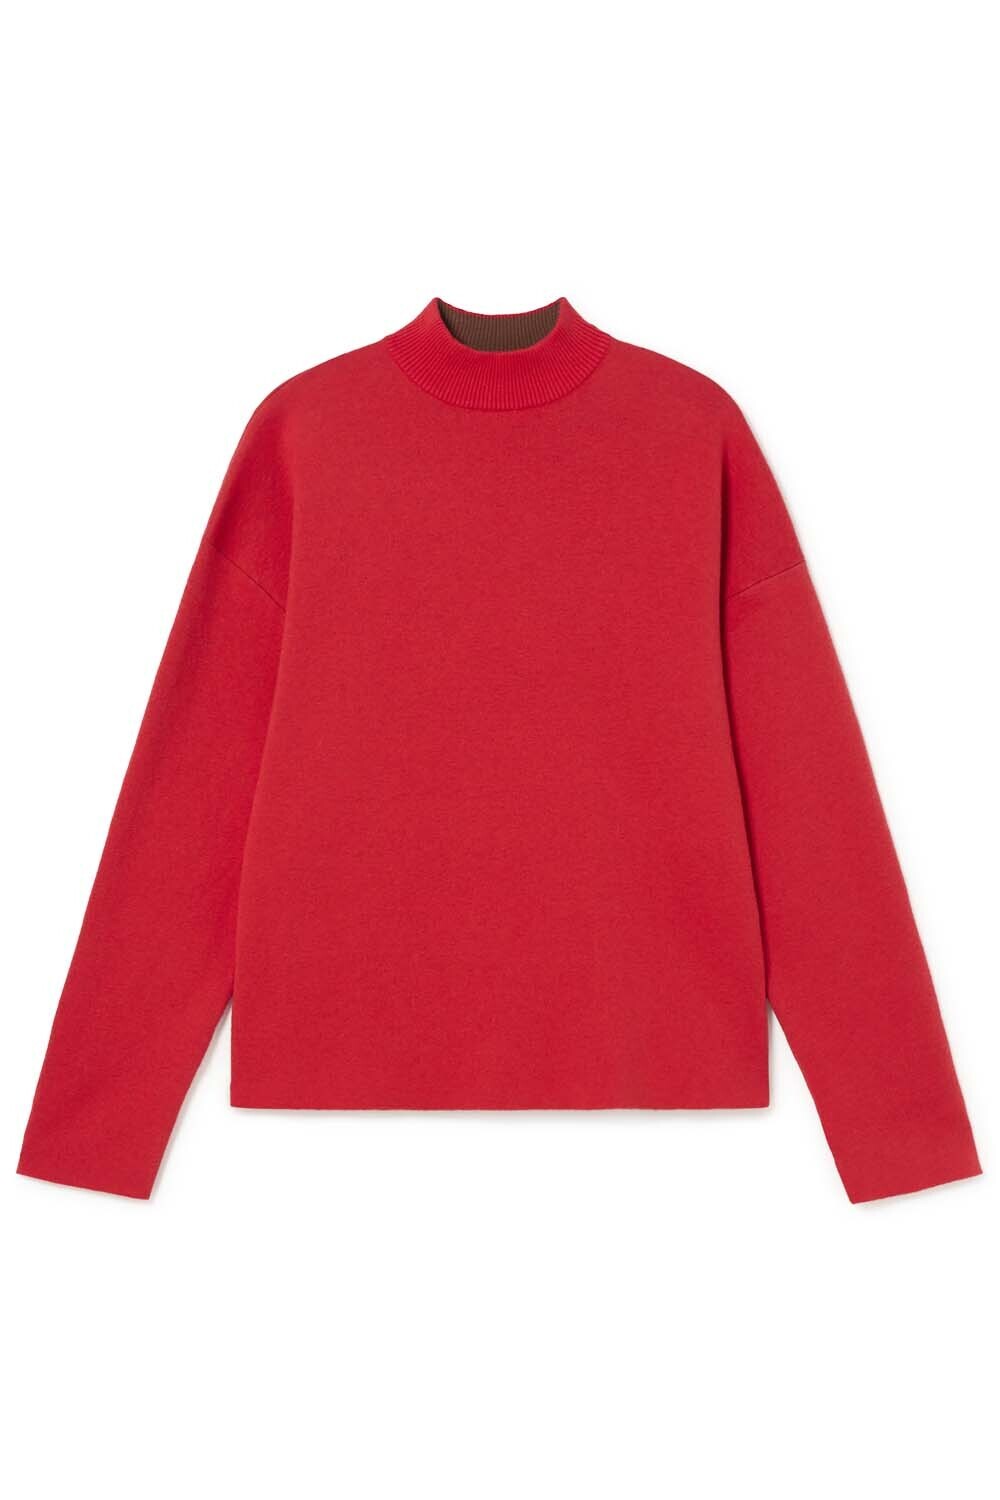 Sita Murt/ knit pullover rood